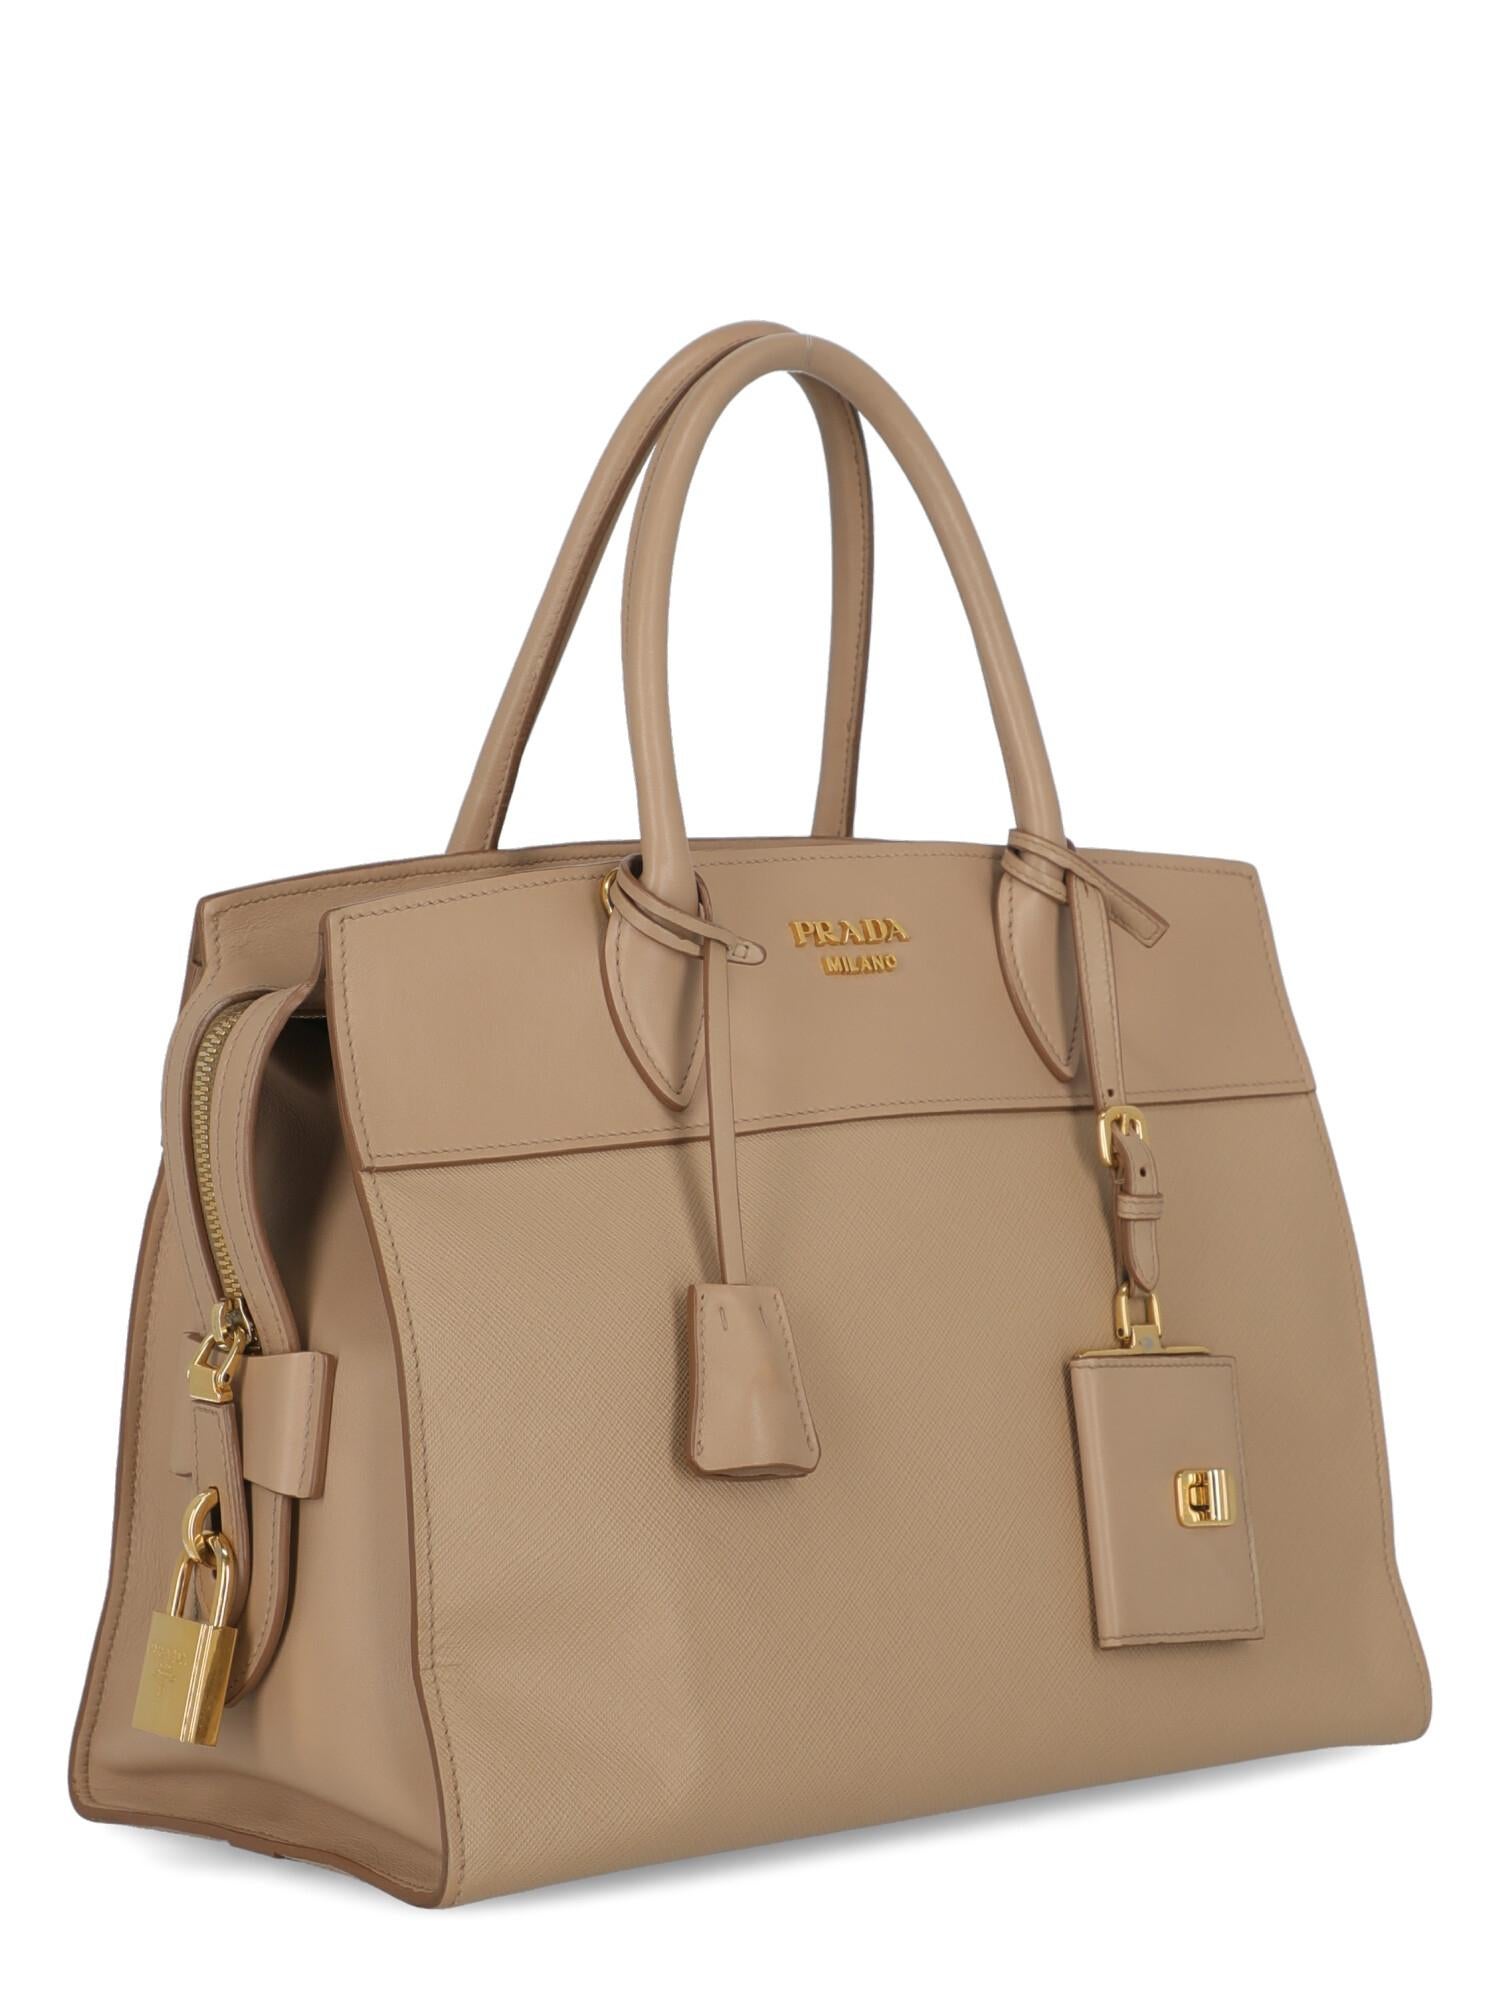 Prada Women's Handbag Esplanade Beige Leather In Good Condition For Sale In Milan, IT